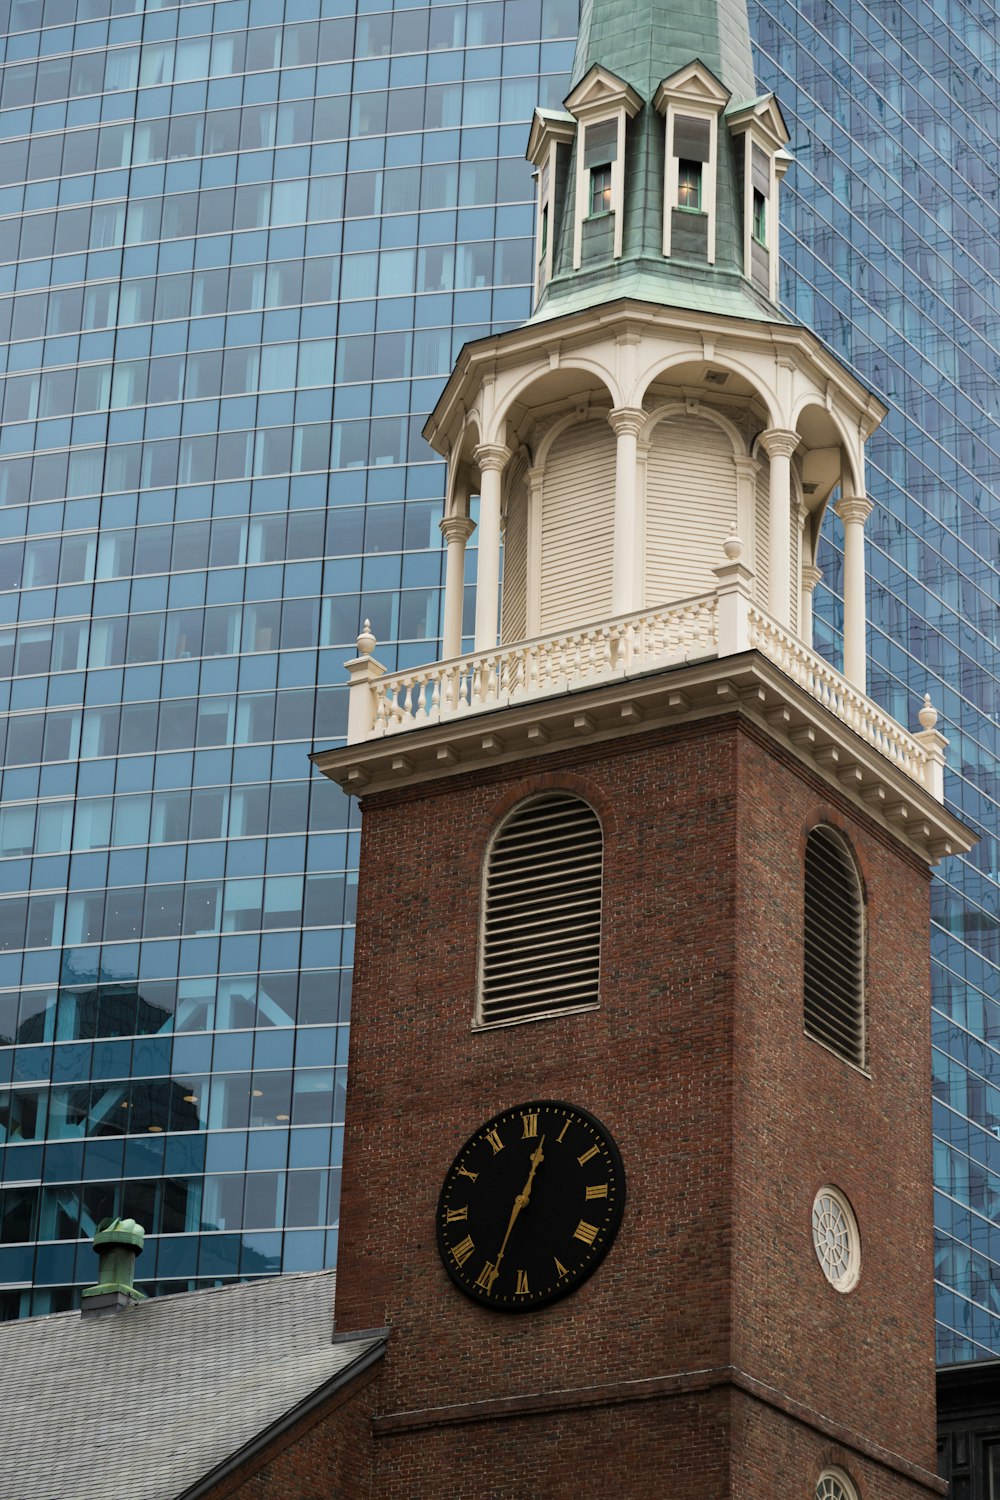 a clock on a brick building